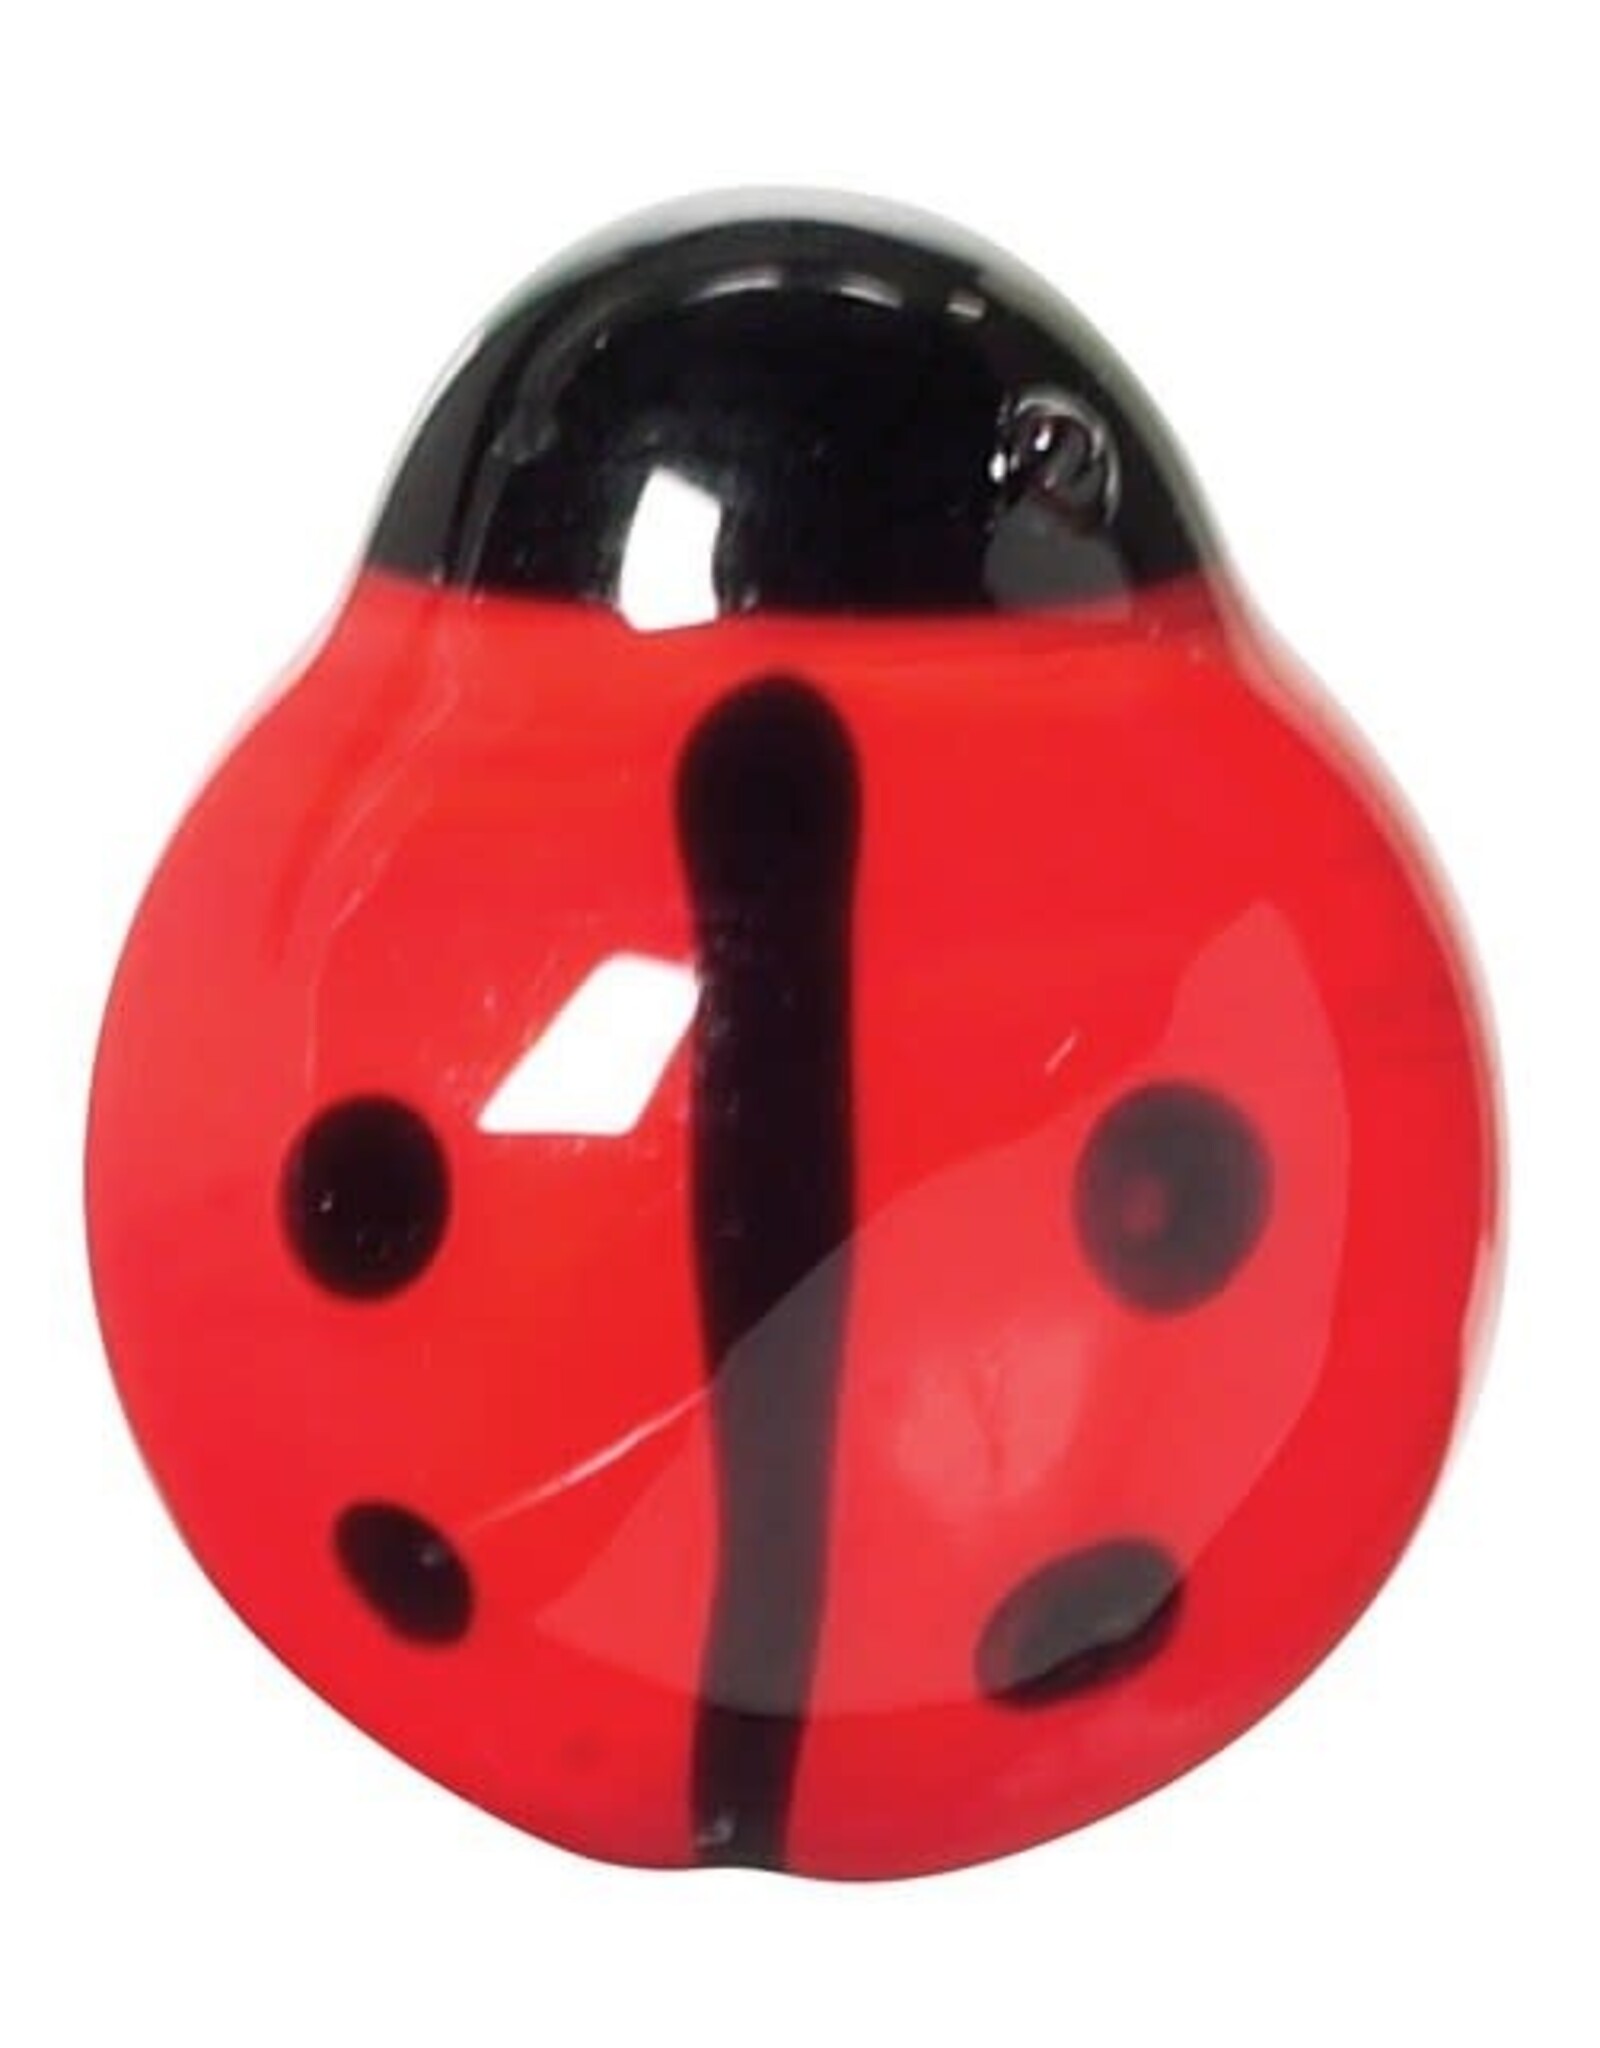 Ganz Miniature World - Ladybug